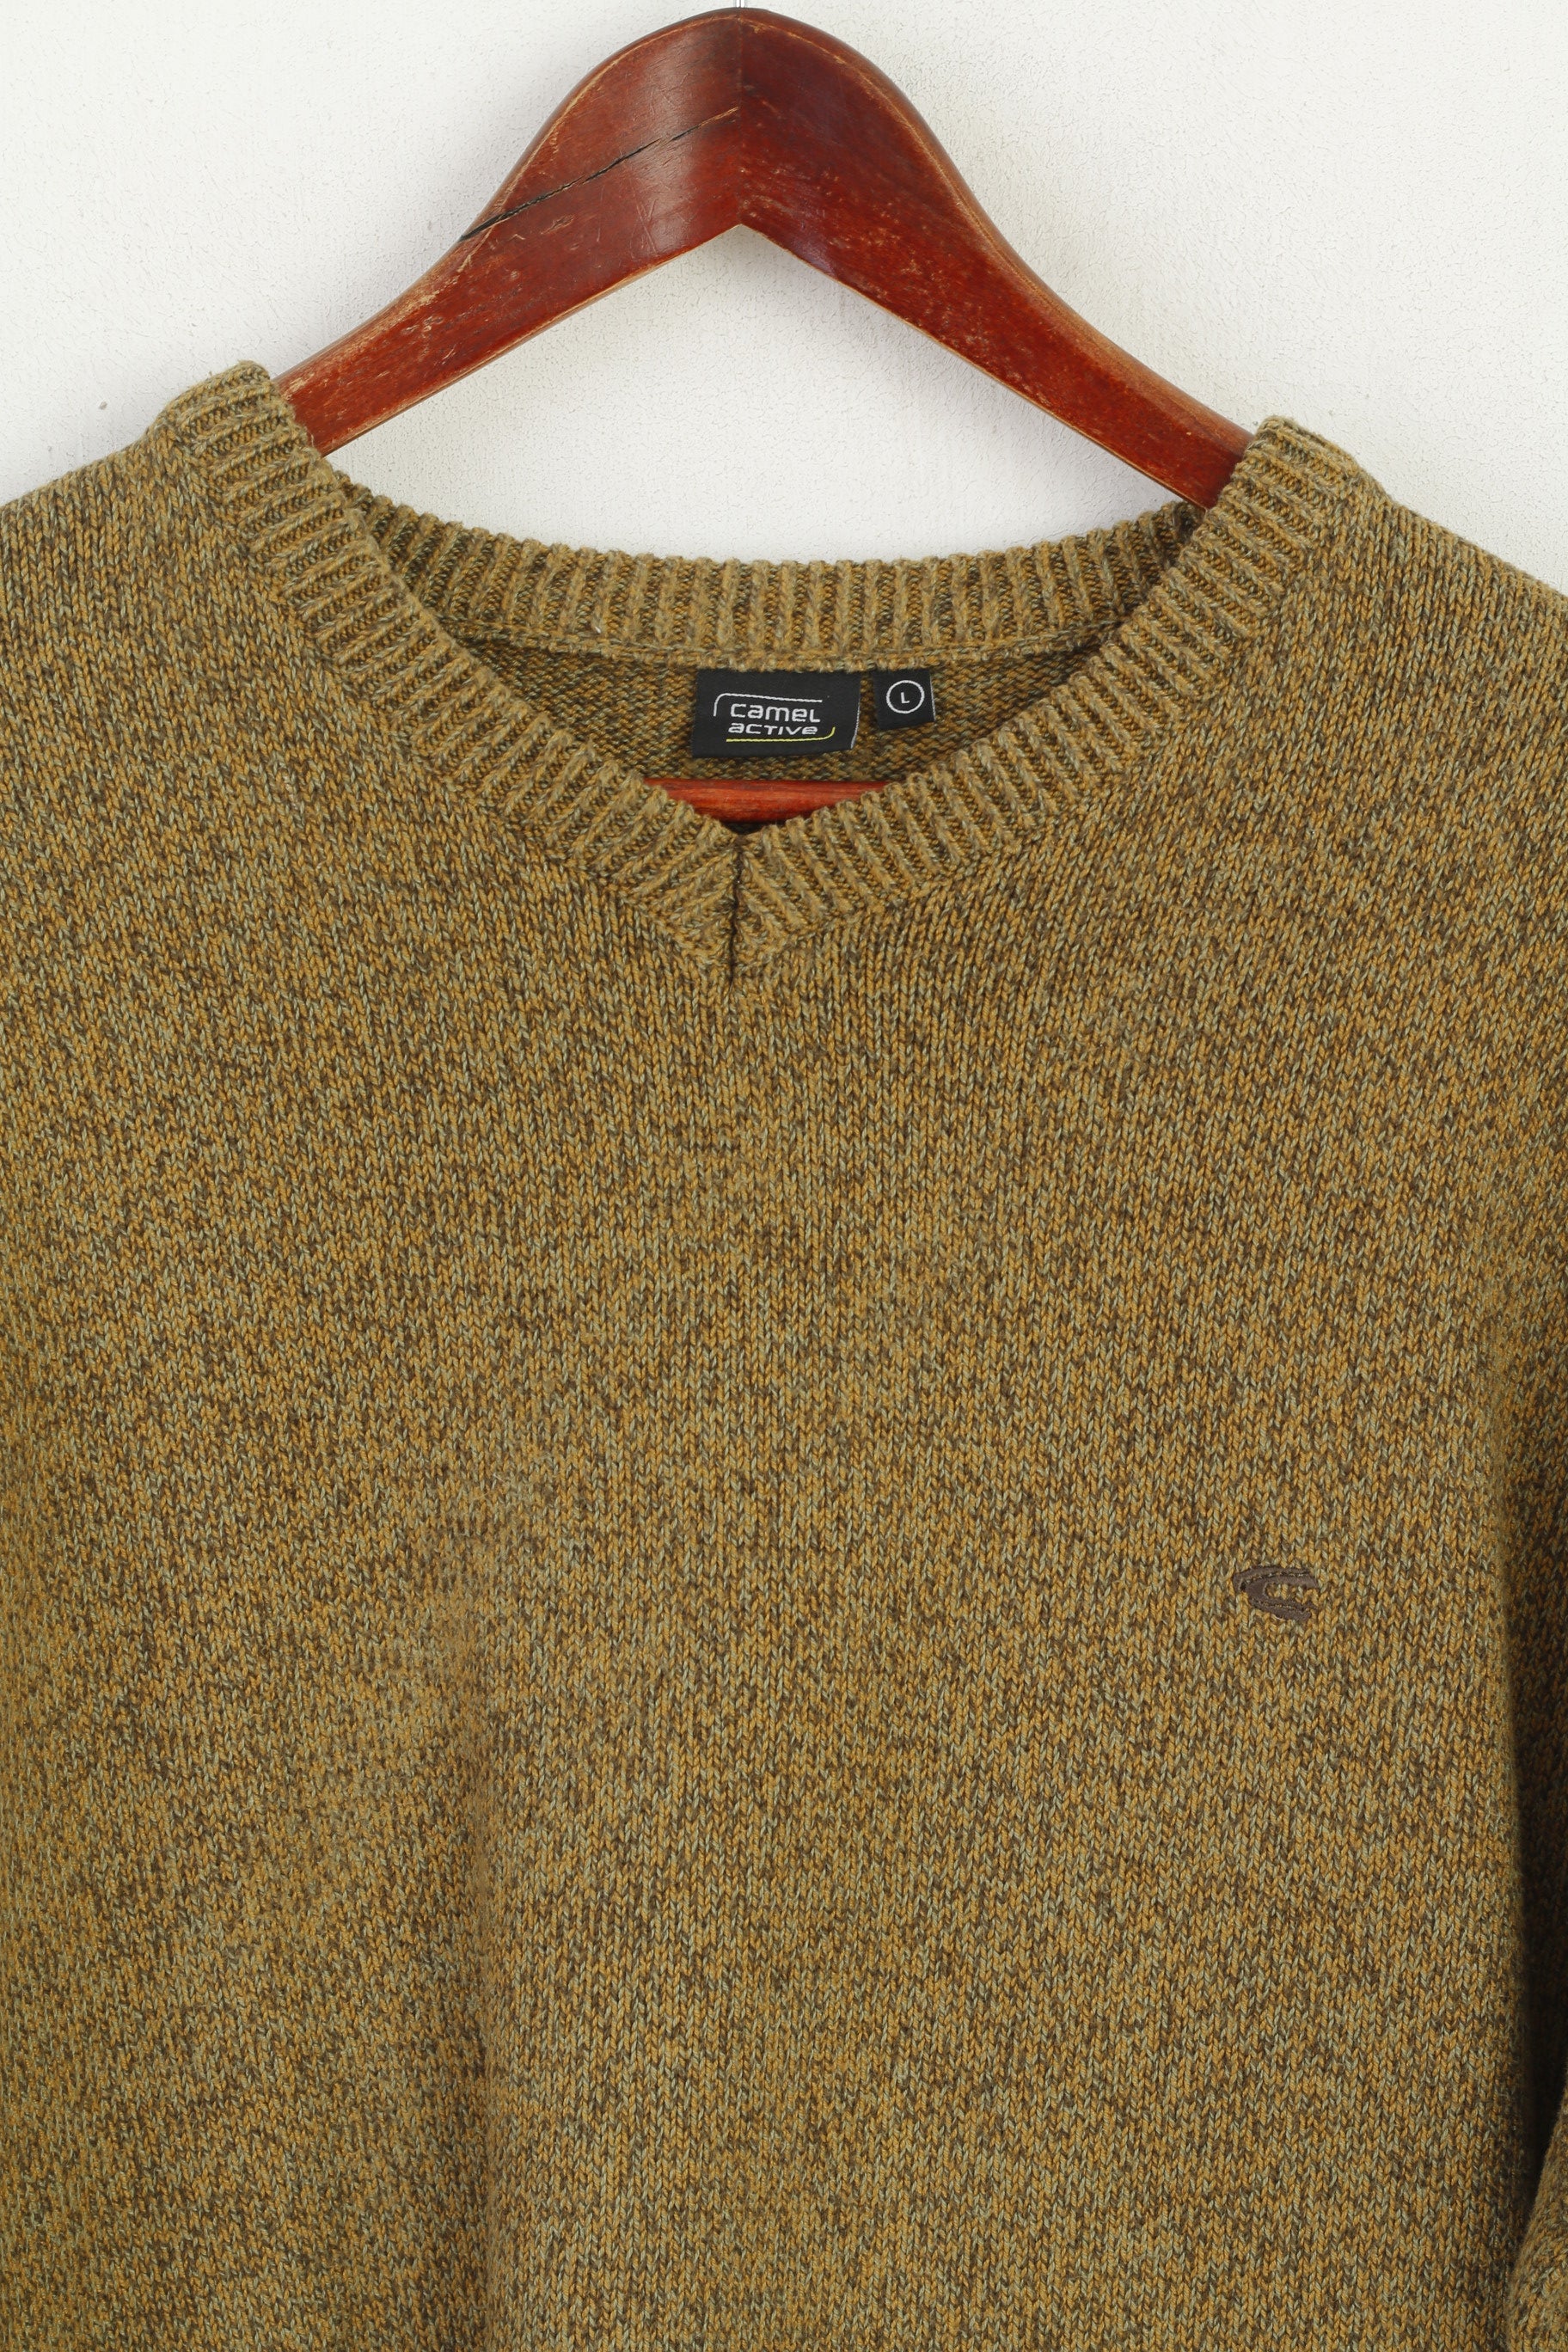 Sweater Jumper Clothes Cotton Logo Classic Knitwear Retrospect Mustard – L Camel Active Men